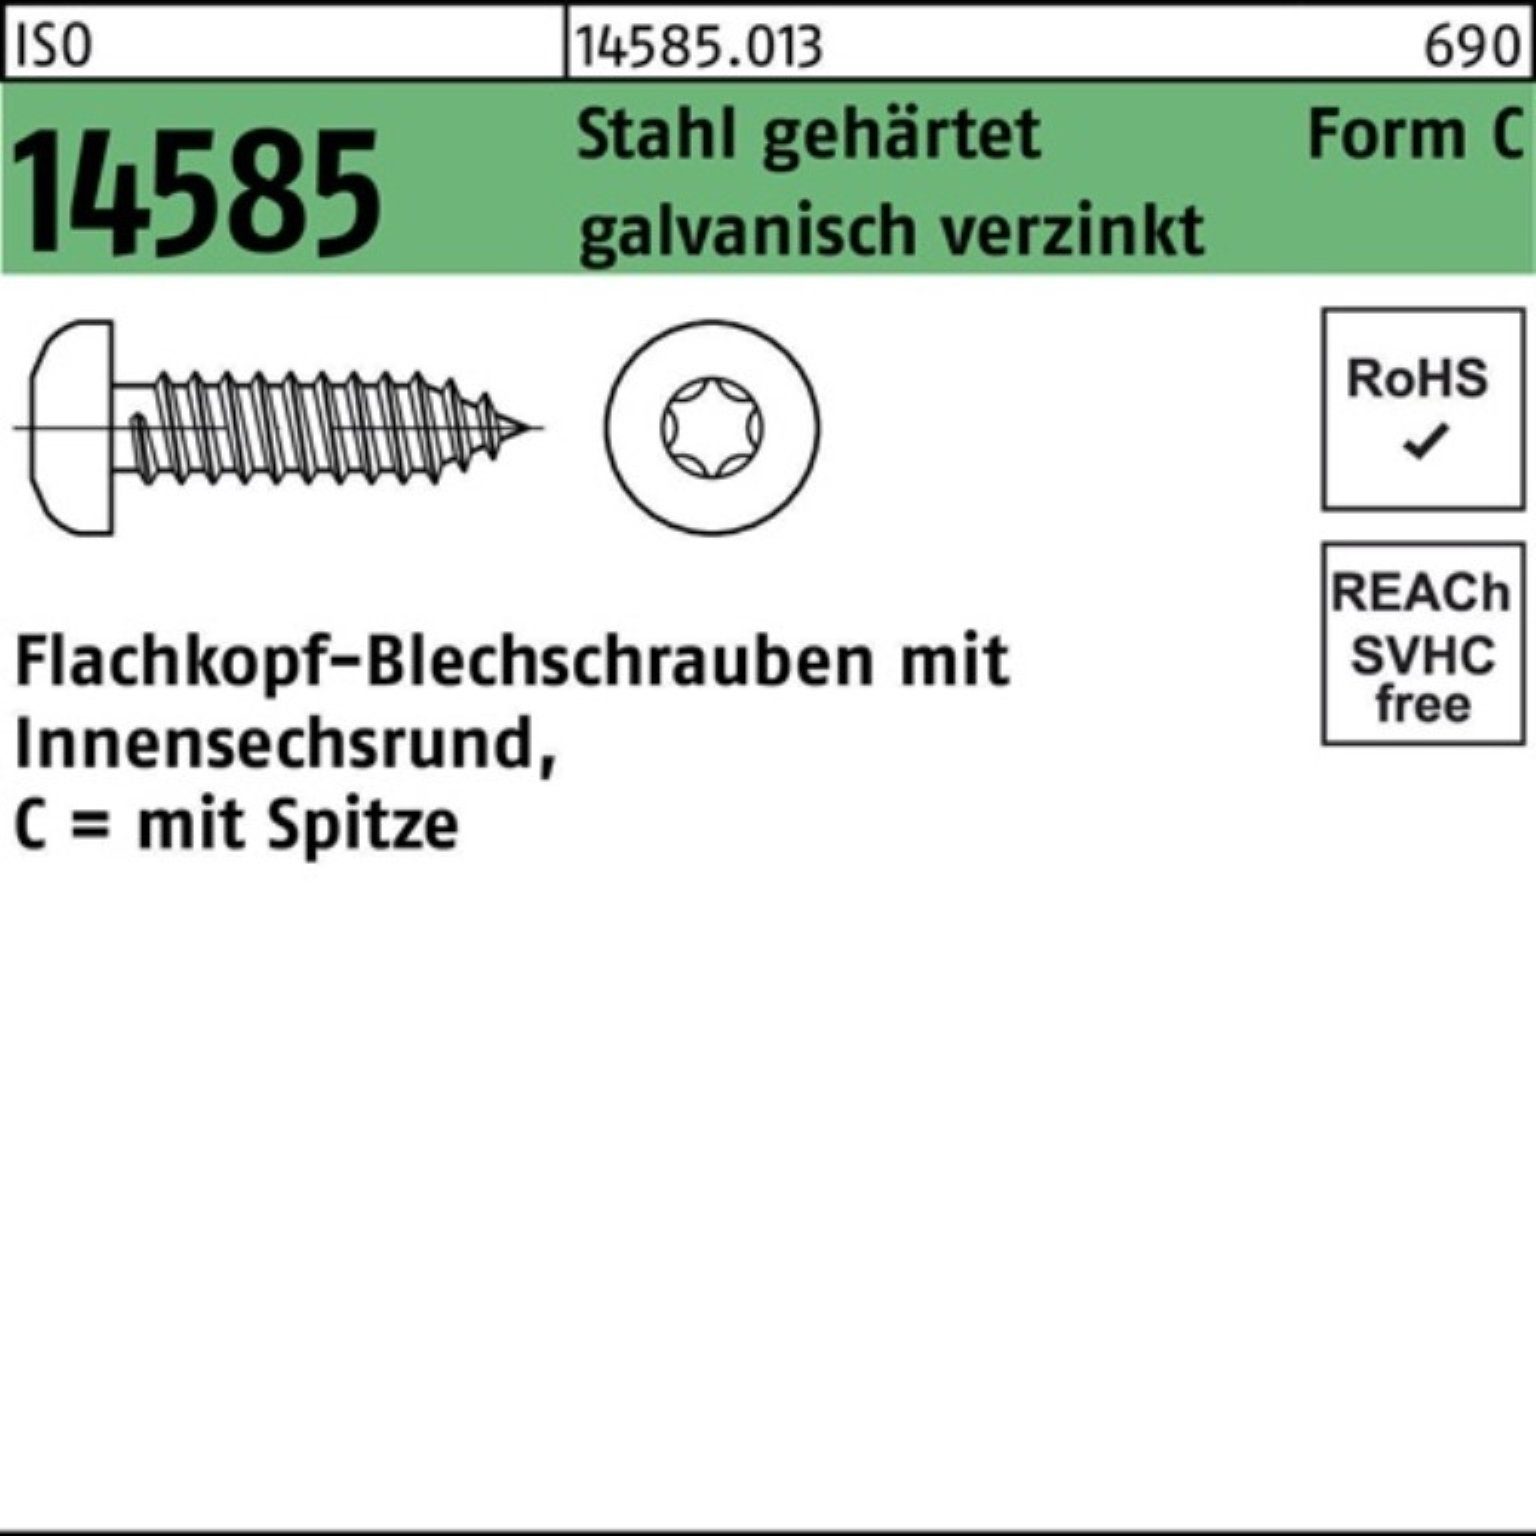 Reyher Blechschraube 500er -C-T20 14585 geh. ISO 4,2x50 ISR/Spitze Pack Stahl Blechschraube